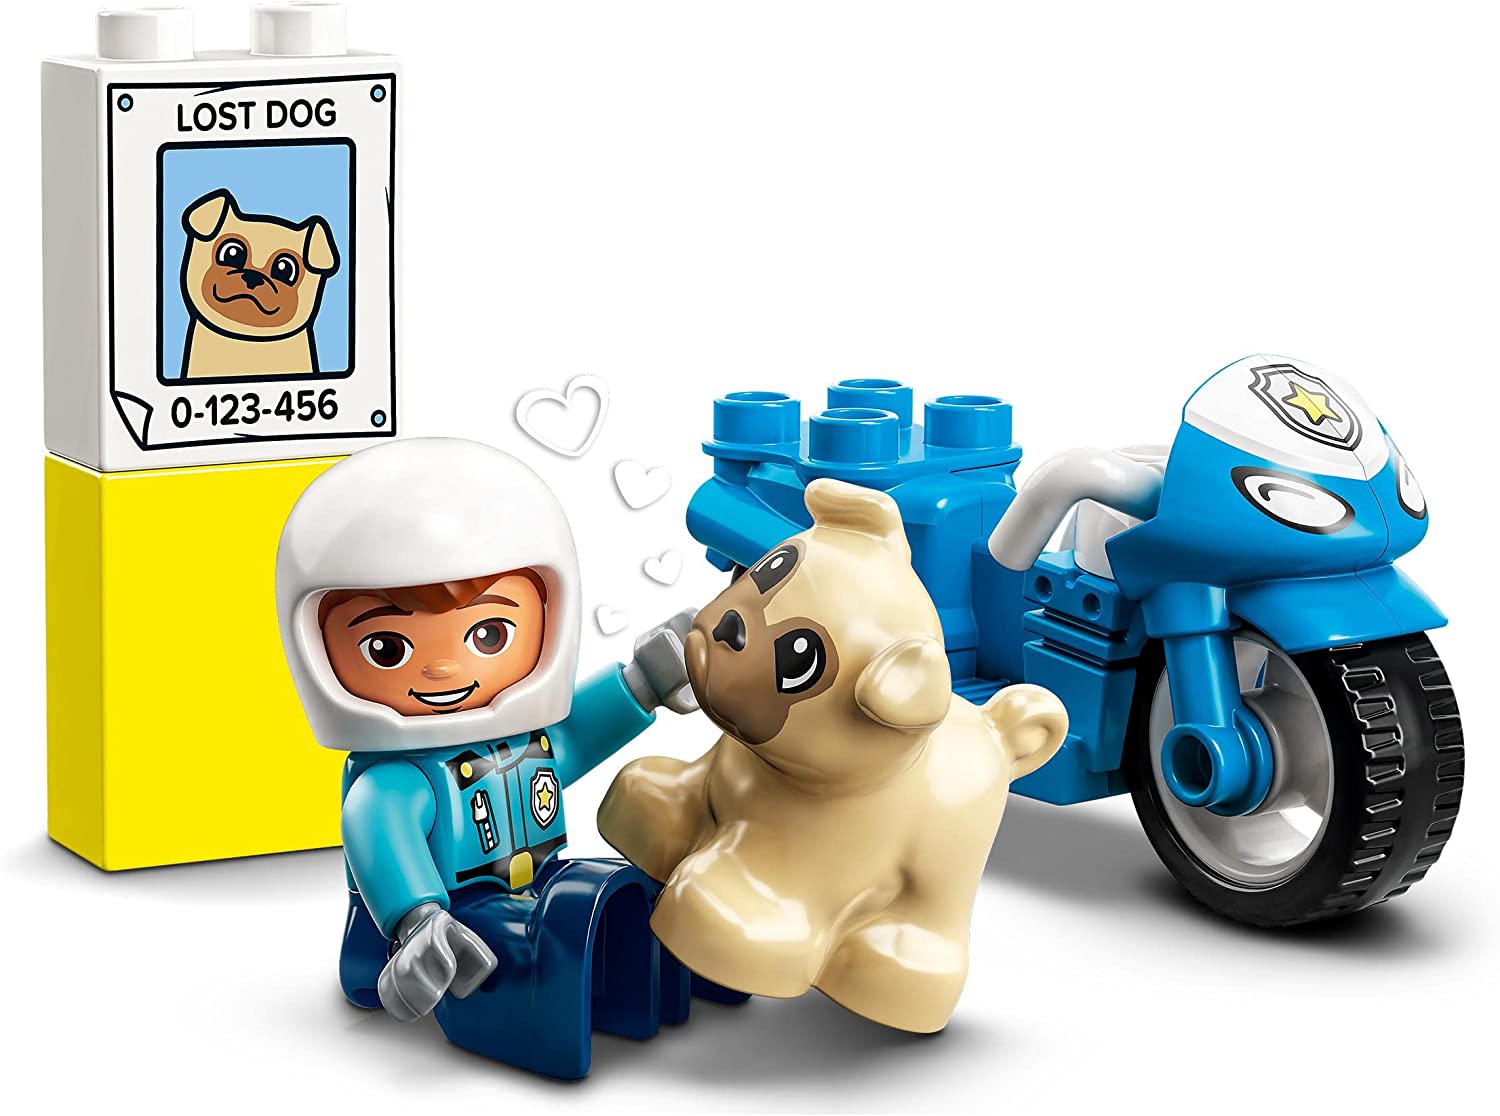 Lego 10967 Police Motorcycle